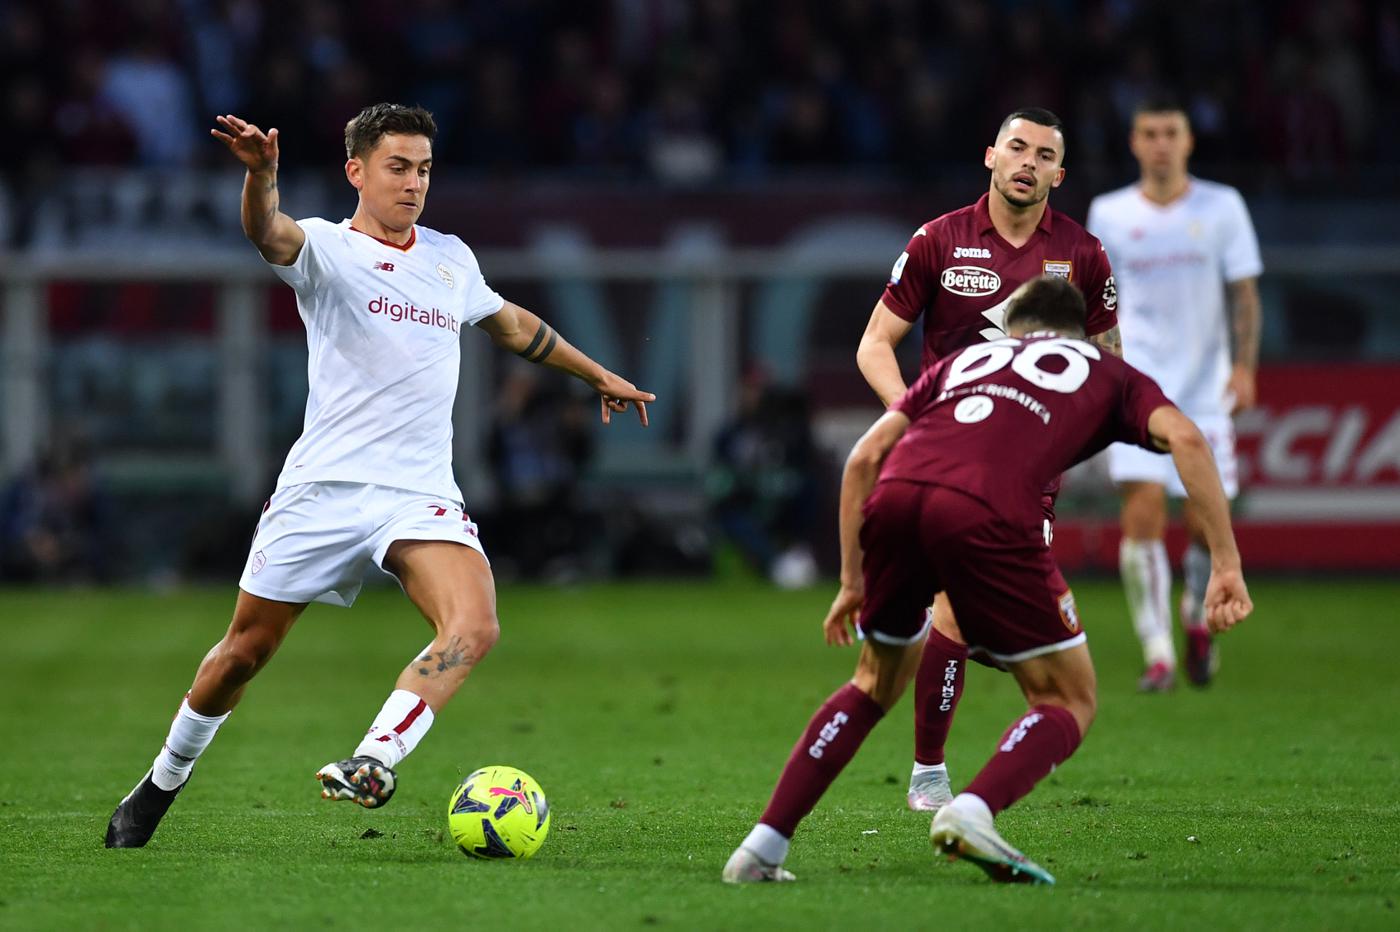 Torino - Roma - 0-1. Italian Championship, round 29. Match review, statistics